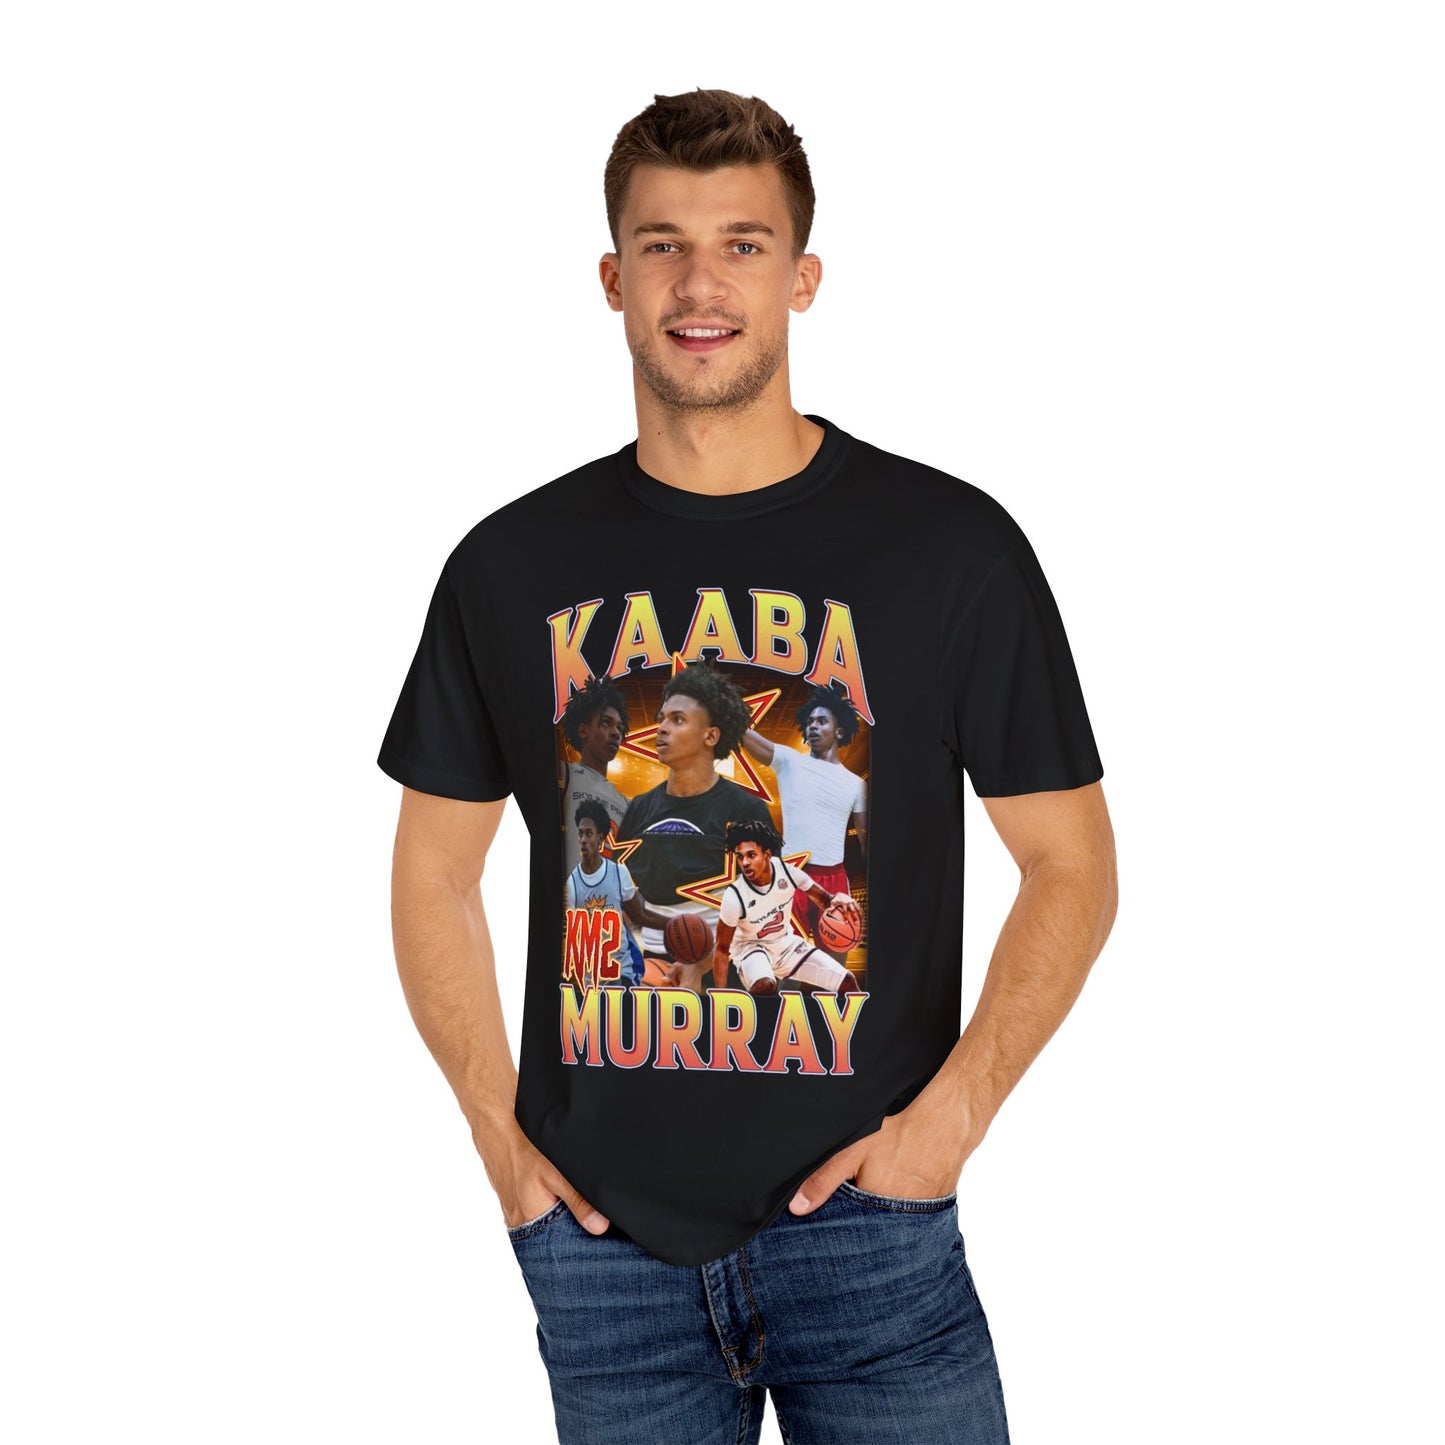 Kaaba Murray graphic T-shirt